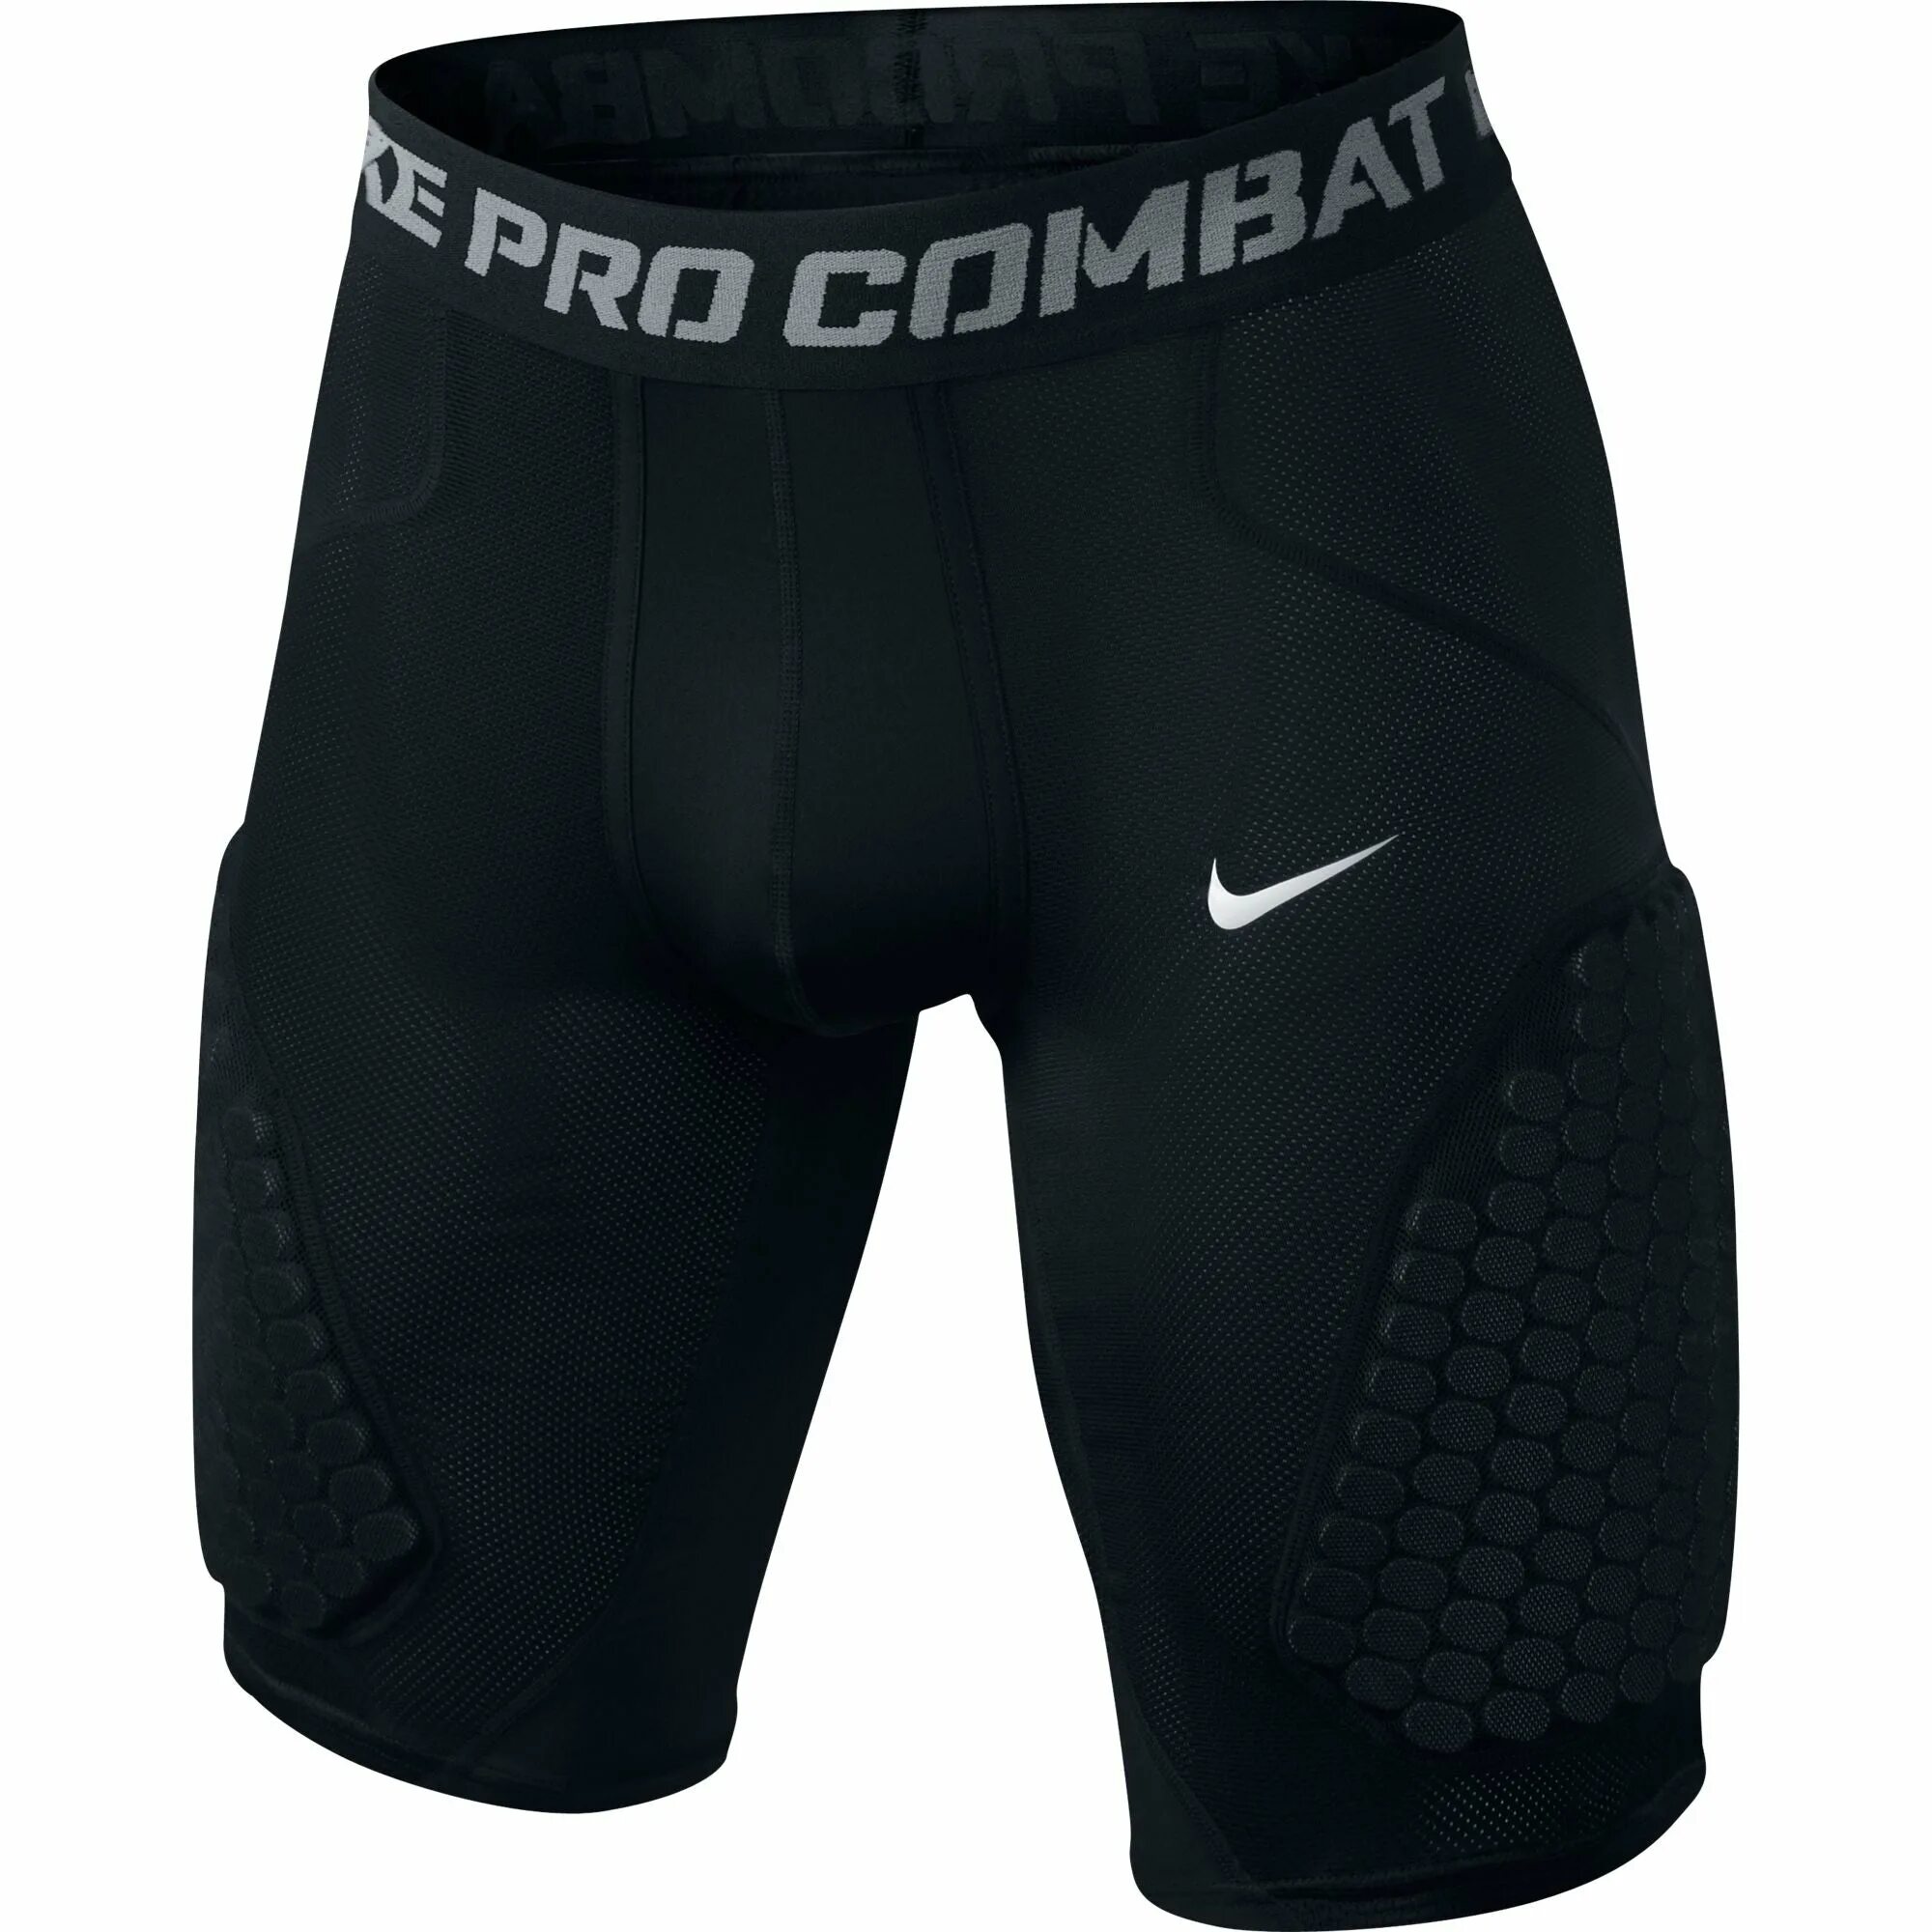 Nike Pro Combat шорты. Nike Pro Combat Padded. Nike Pro Combat Compression. Адидас Pro Combat шорты. Nike pro combat